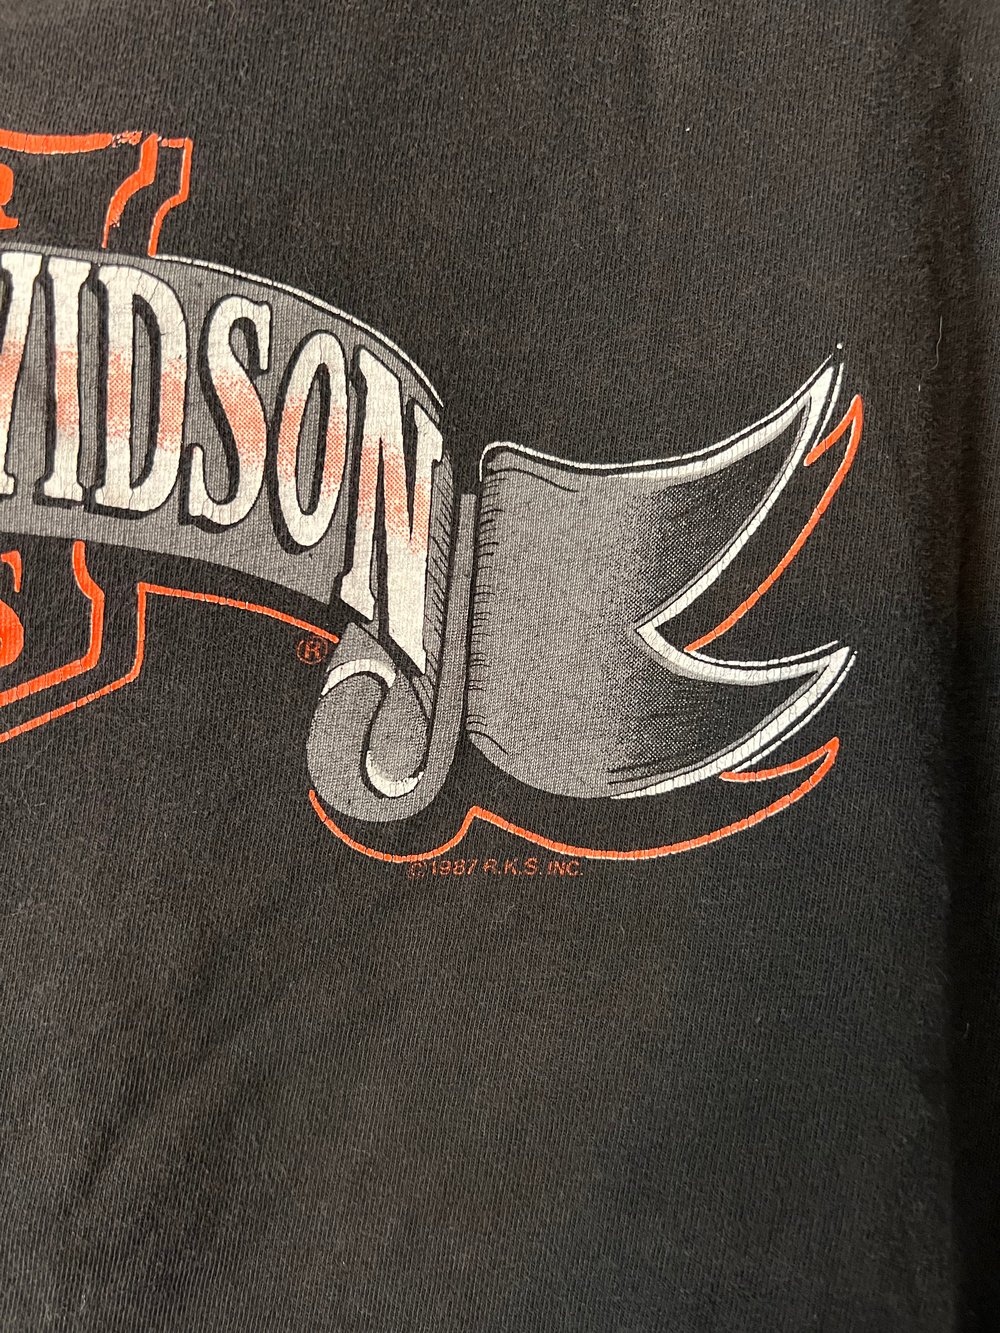 Vintage Sacramento Harley Davidson Tee (XL)